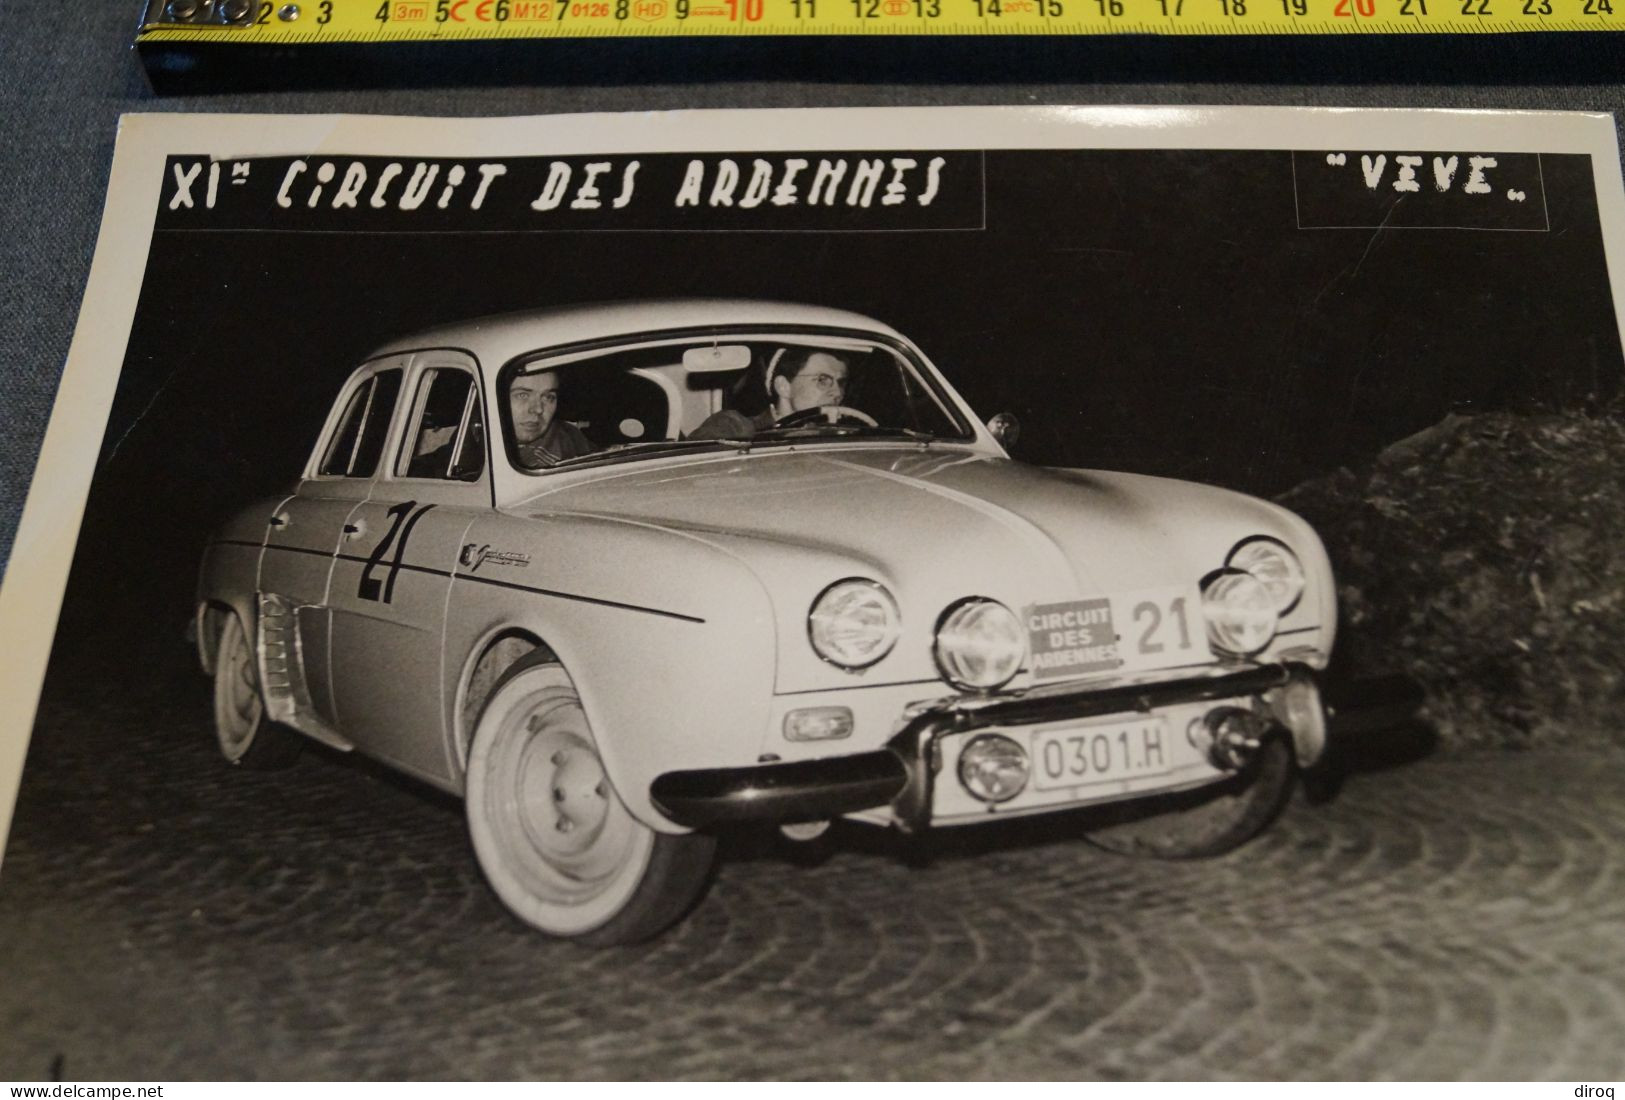 11 Iem Rallye Des Ardennes,grande Photo Originale, 24 Cm. Sur 18 Cm. - Automobiles